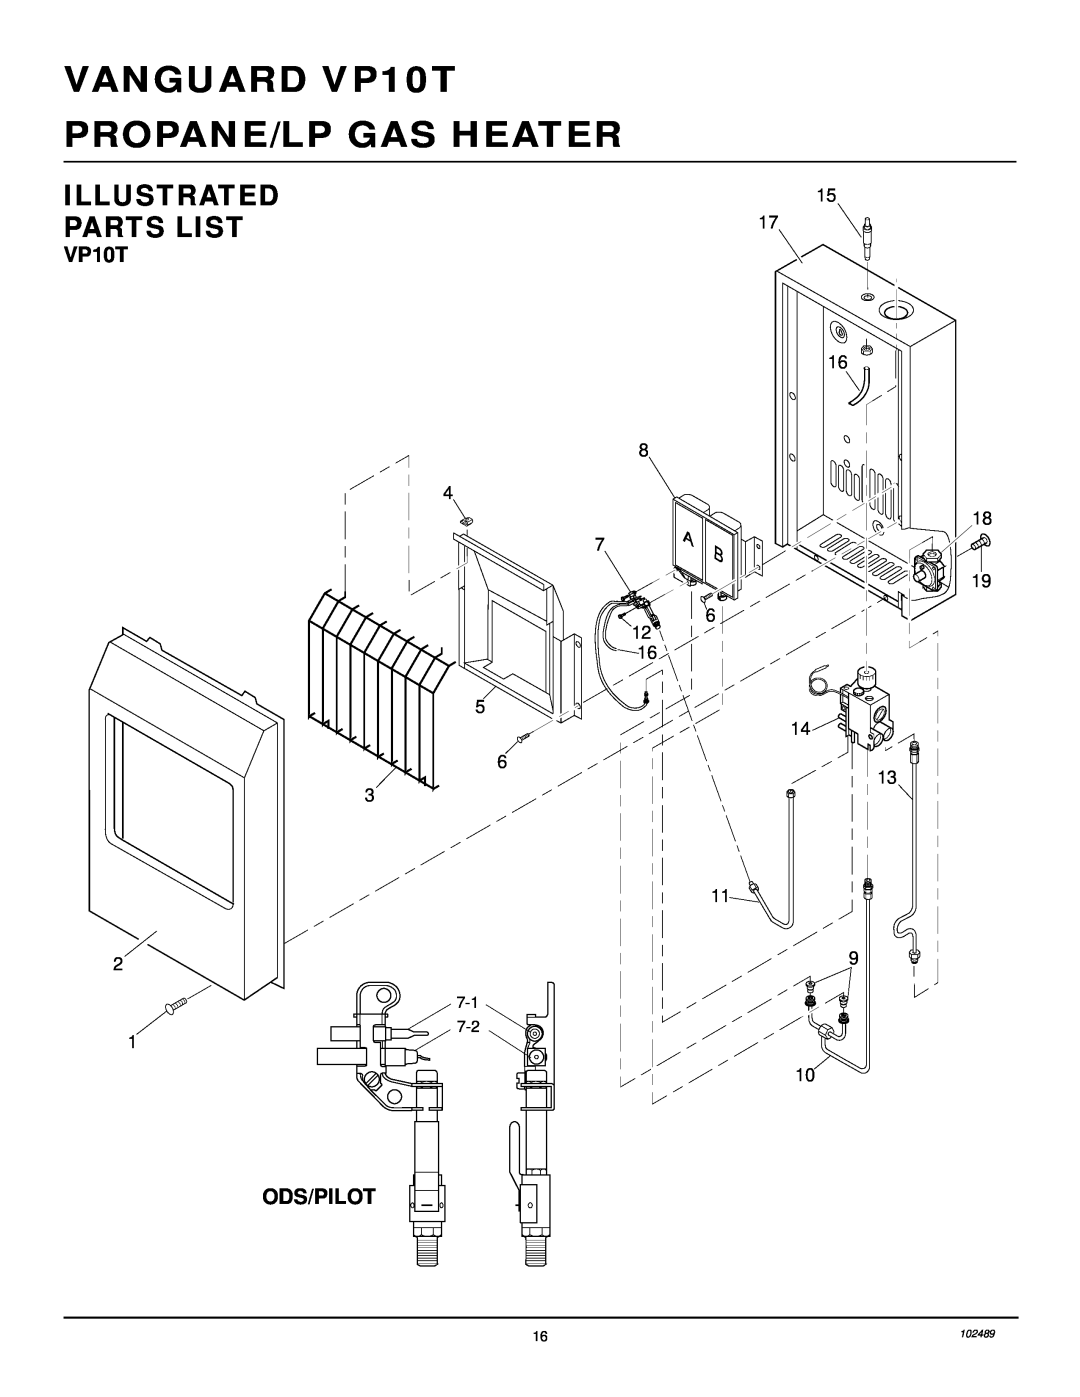 Desa installation manual Illustrated Parts List, Ods/Pilot, VANGUARD VP10T PROPANE/LP GAS HEATER, 102489 